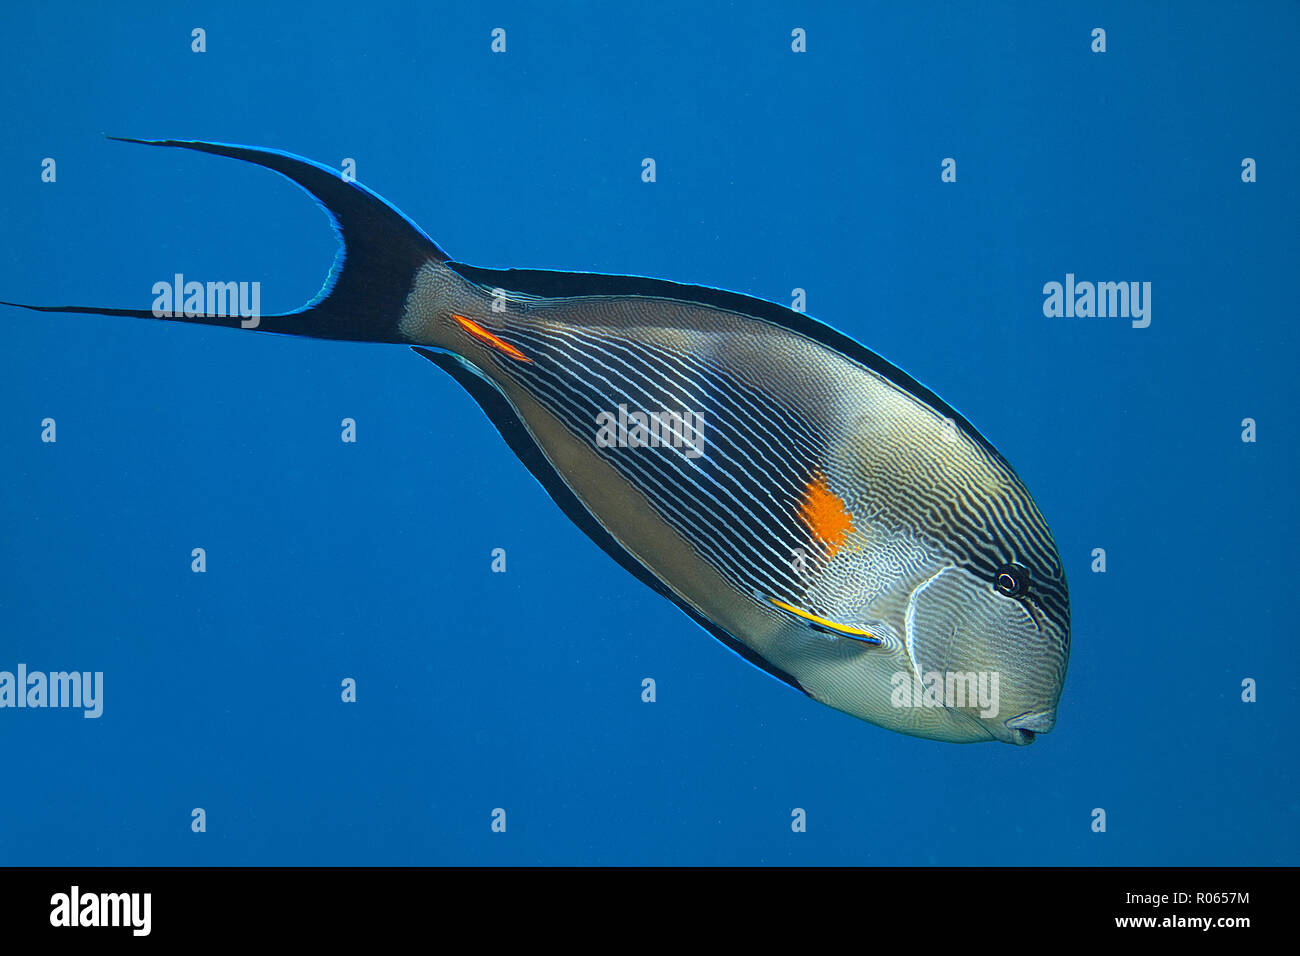 Arabischer Doktorfisch (Acanthurus sohal) im blauen Wasser, Sinai, Ägypten | Sohal surgeonfish (Acanthurus sohal) at blue sea, Sinai, Egypt Stock Photo